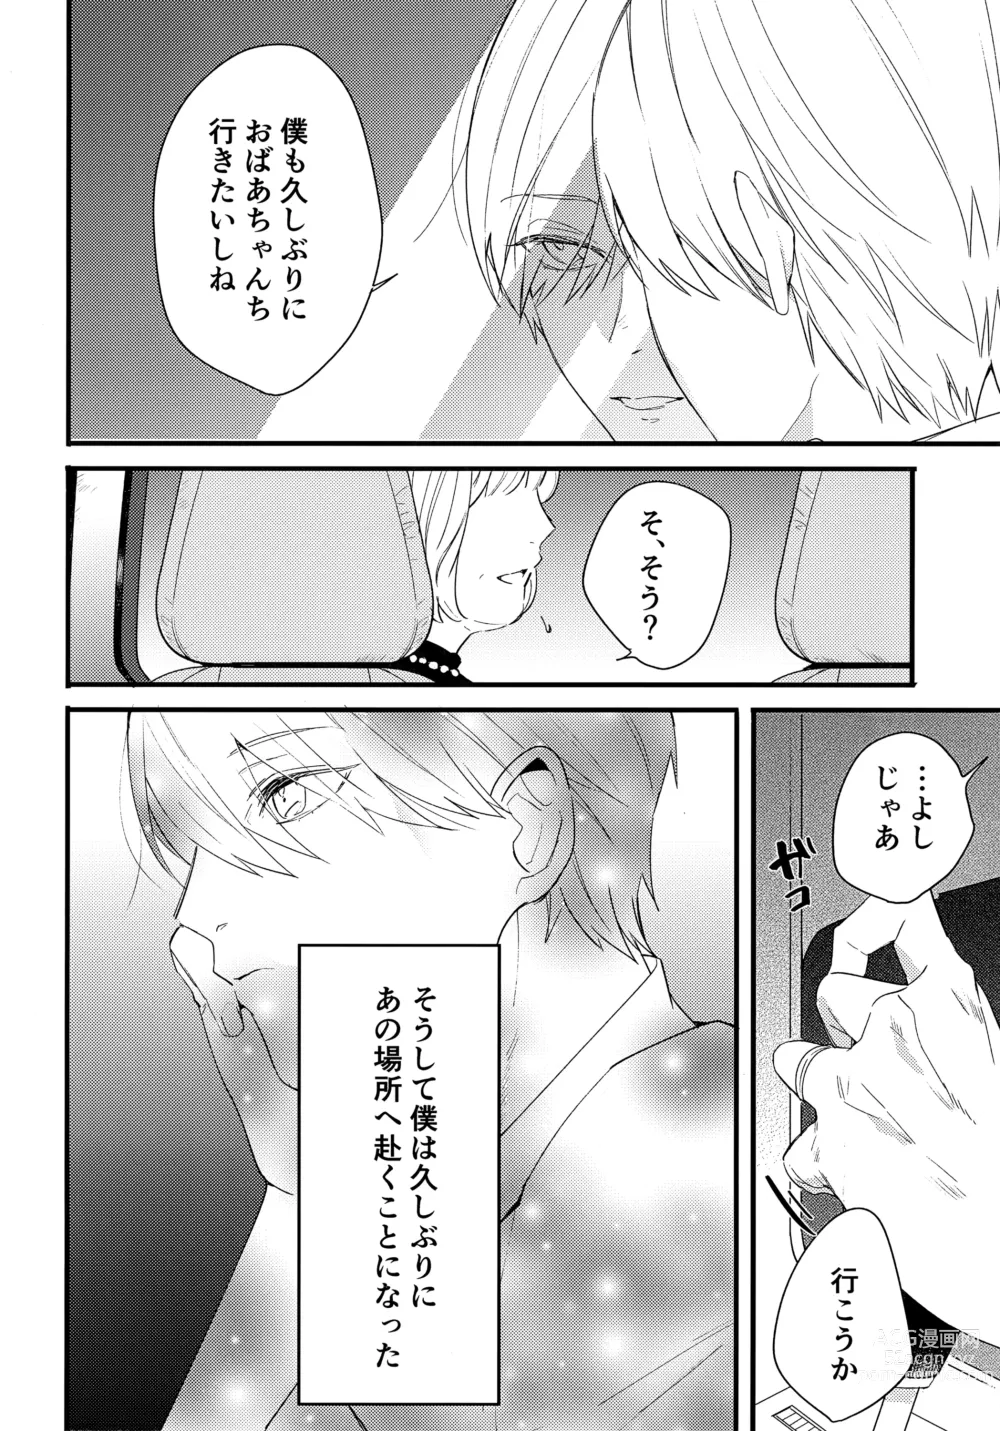 Page 3 of doujinshi Kagerou no Hikari - light of heat haze